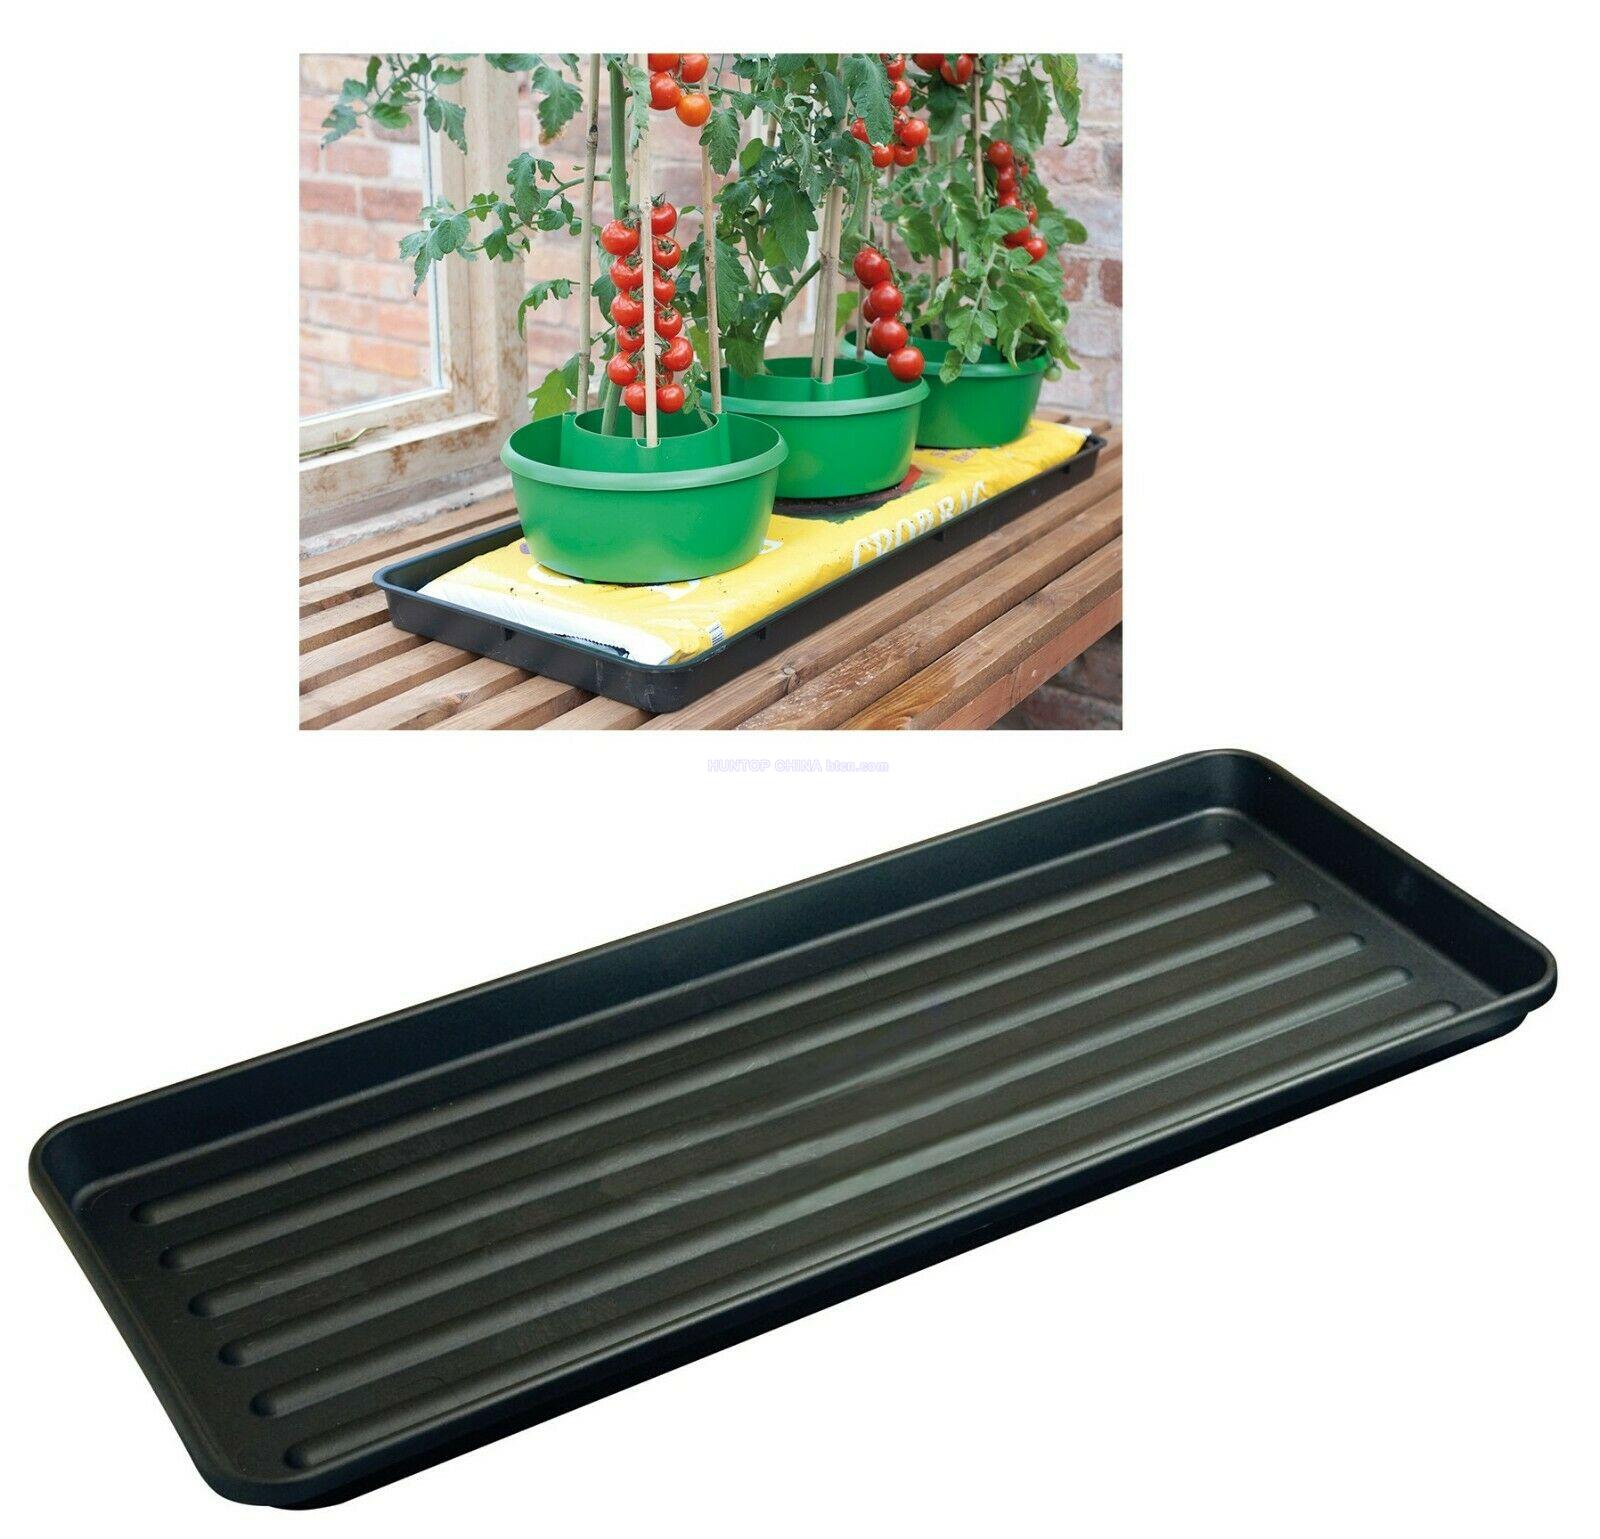 Self watering tray China manufacturer Plant Grow Bag Tray Grow Pot